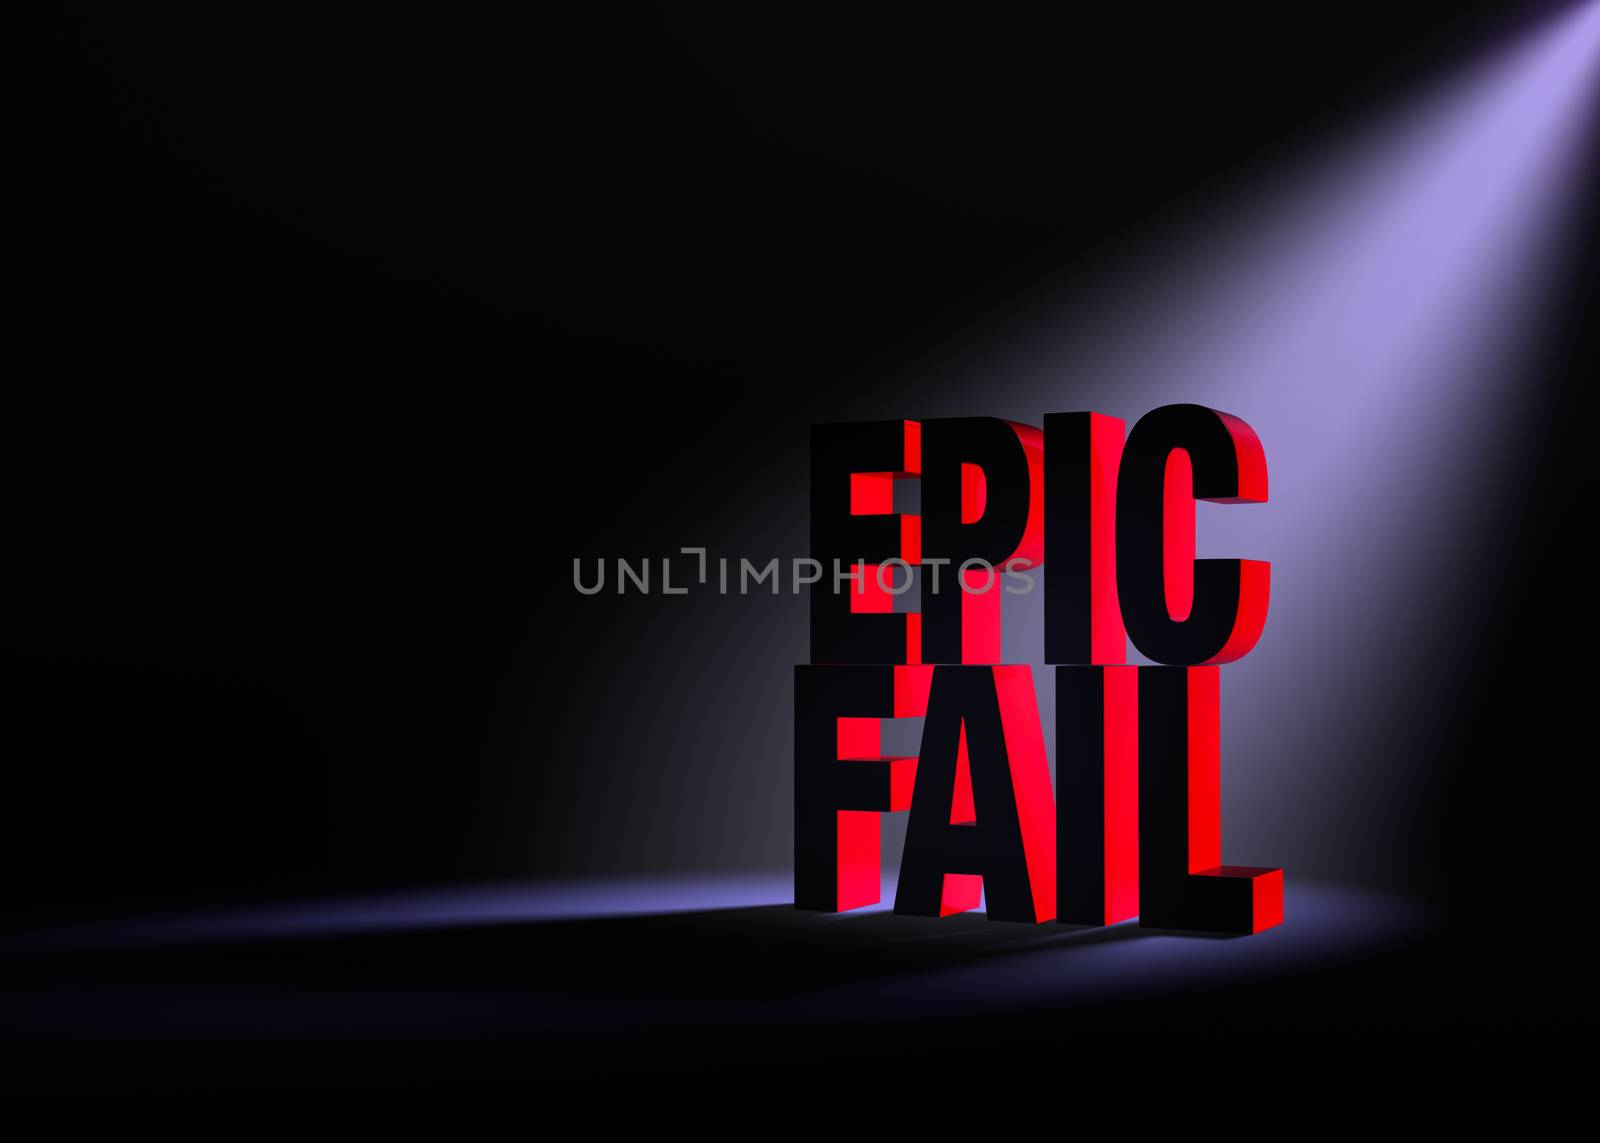 An Impending Epic Fail by Em3